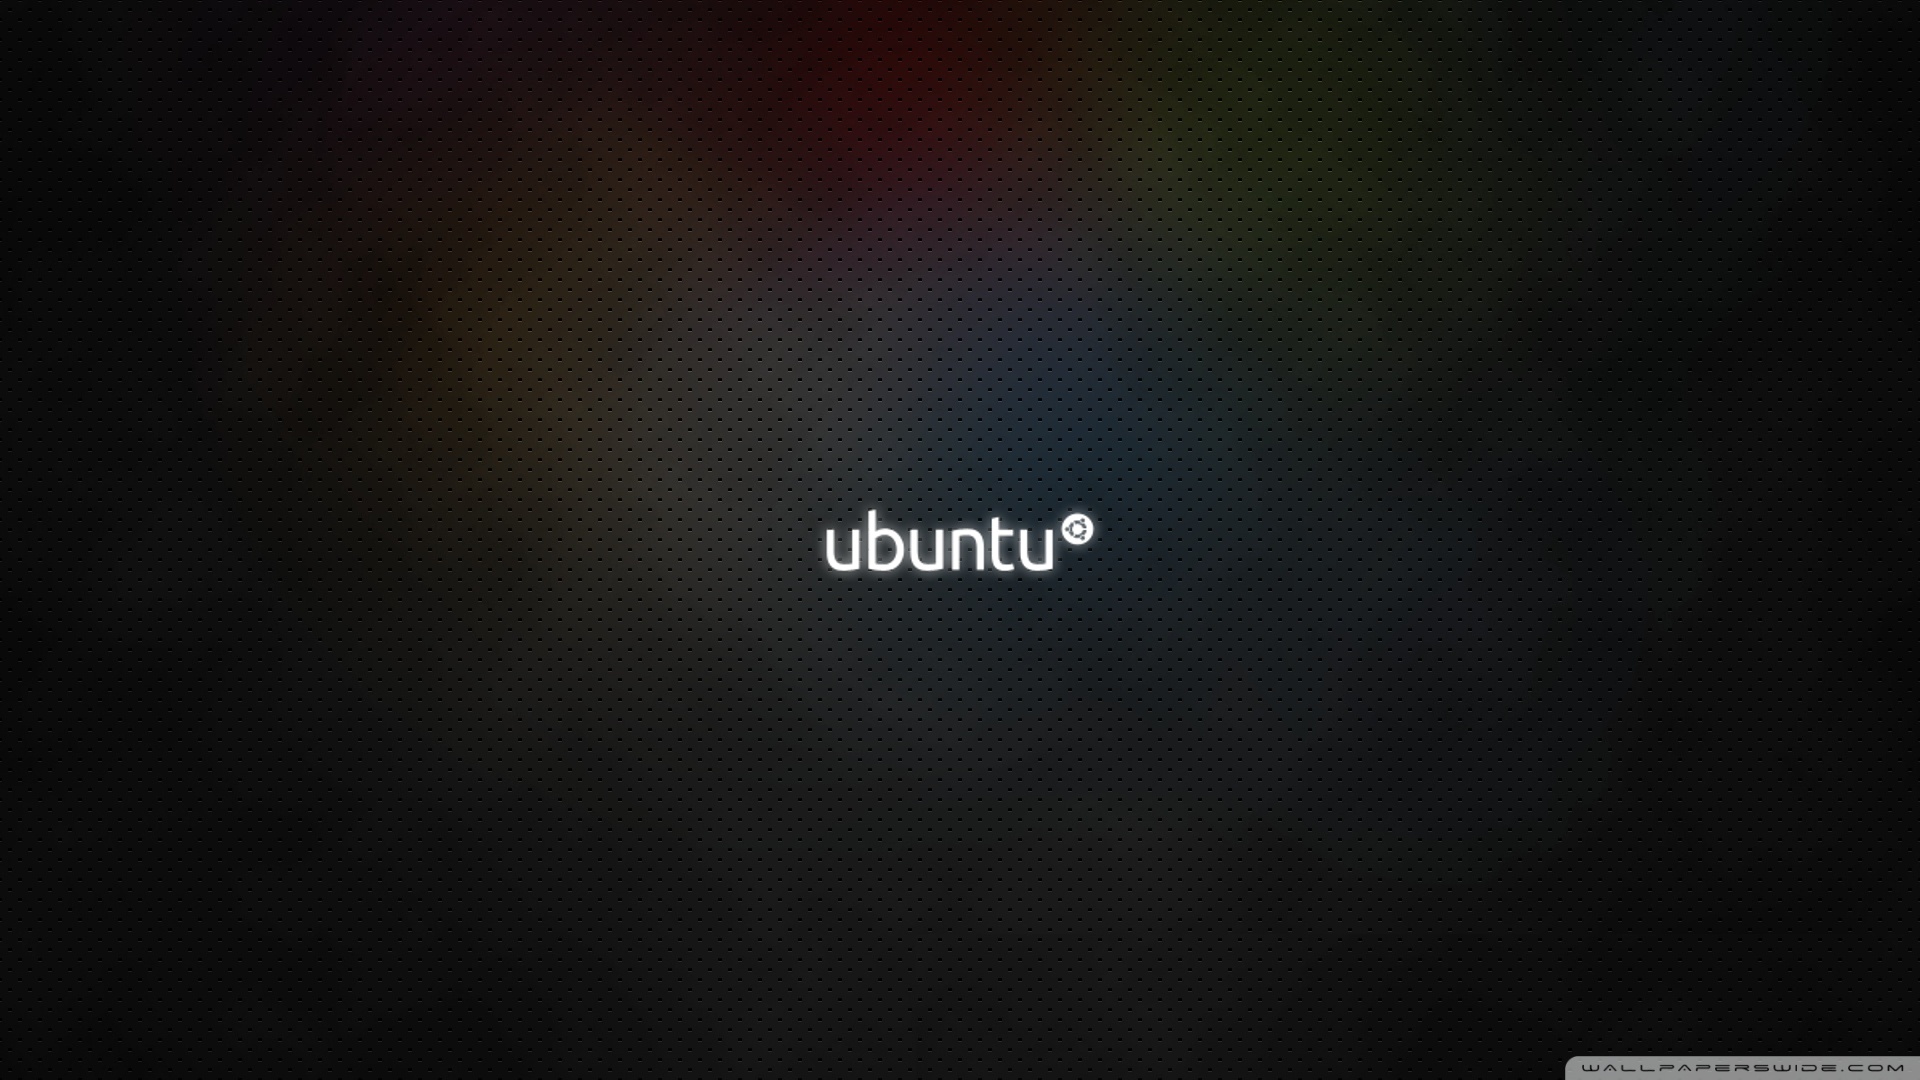 Ubuntu 1 0 Wallpaper 1920x1080 Ubuntu 1 0 1920x1080